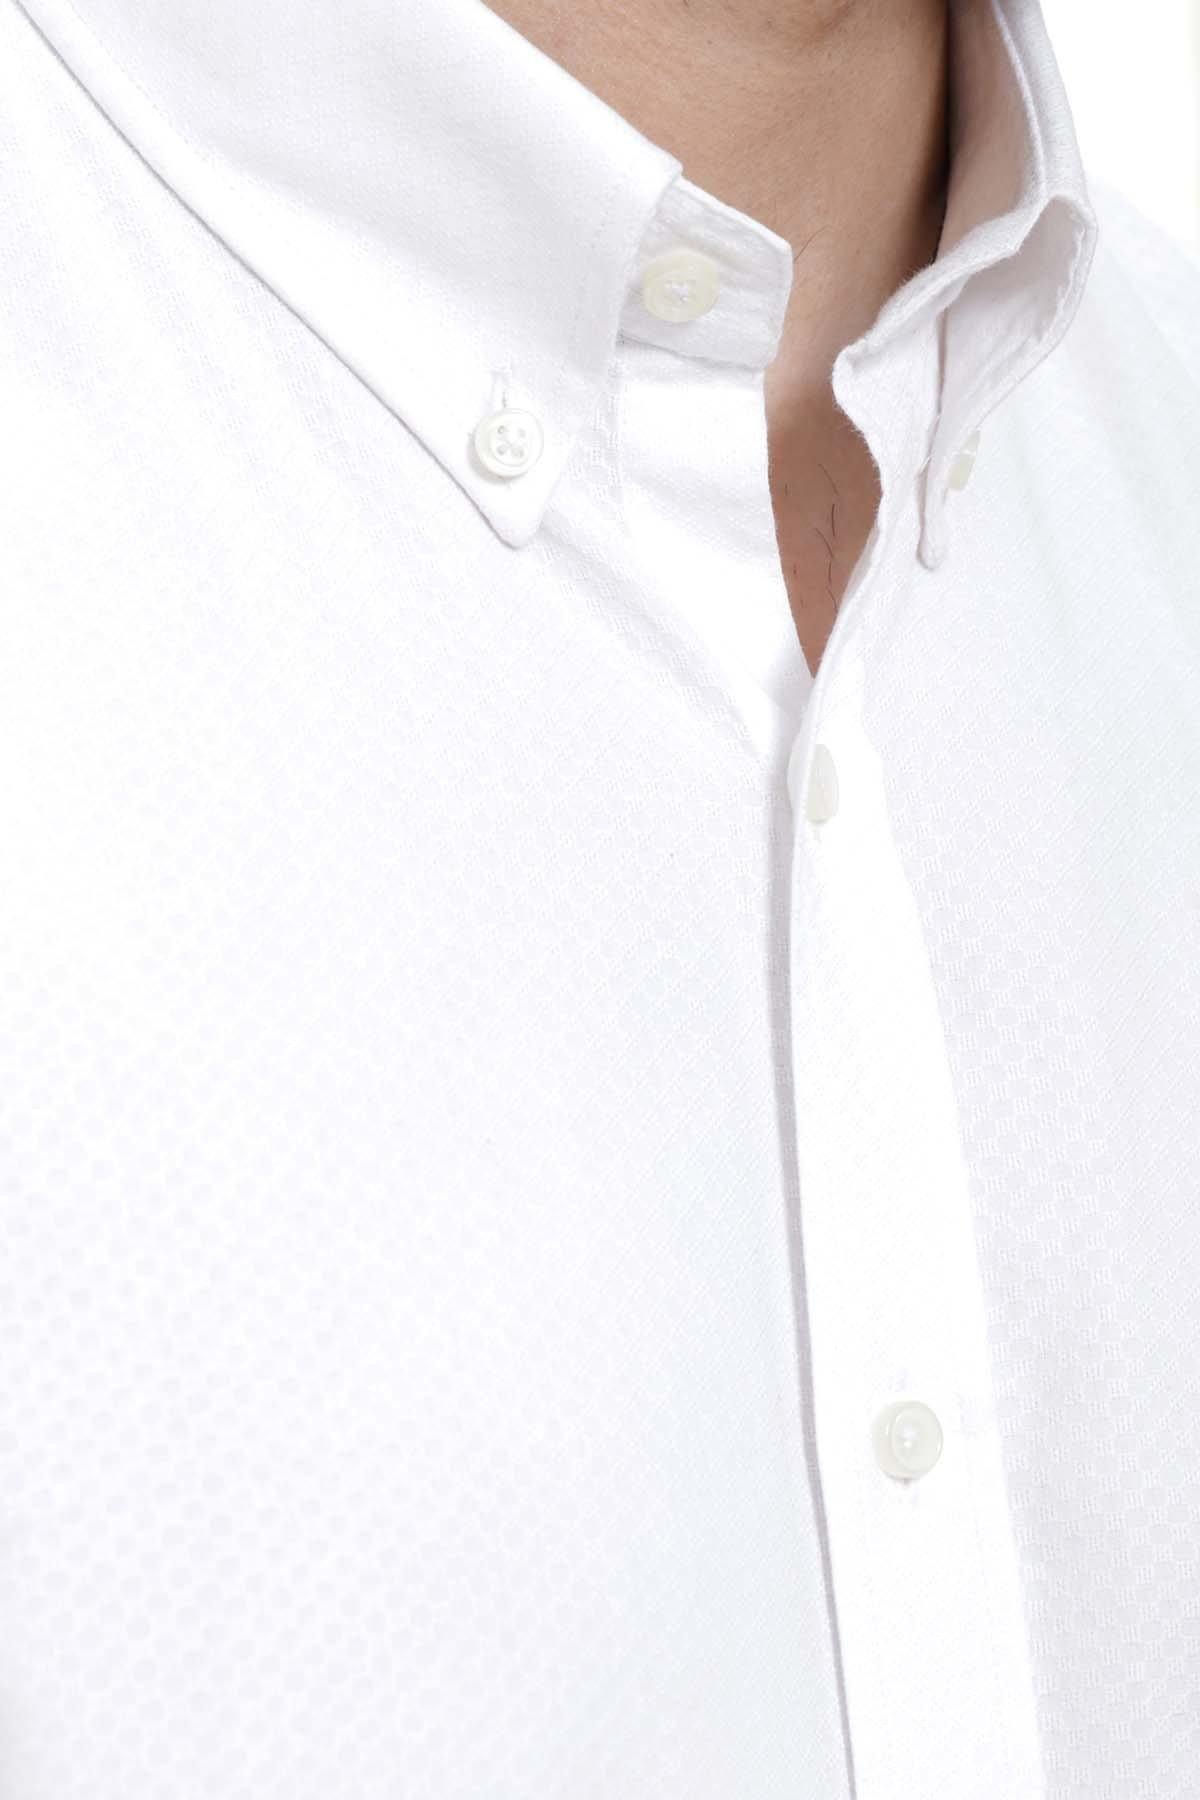 SMART SHIRT FULL SLEEVE  WHITE at Charcoal Clothing